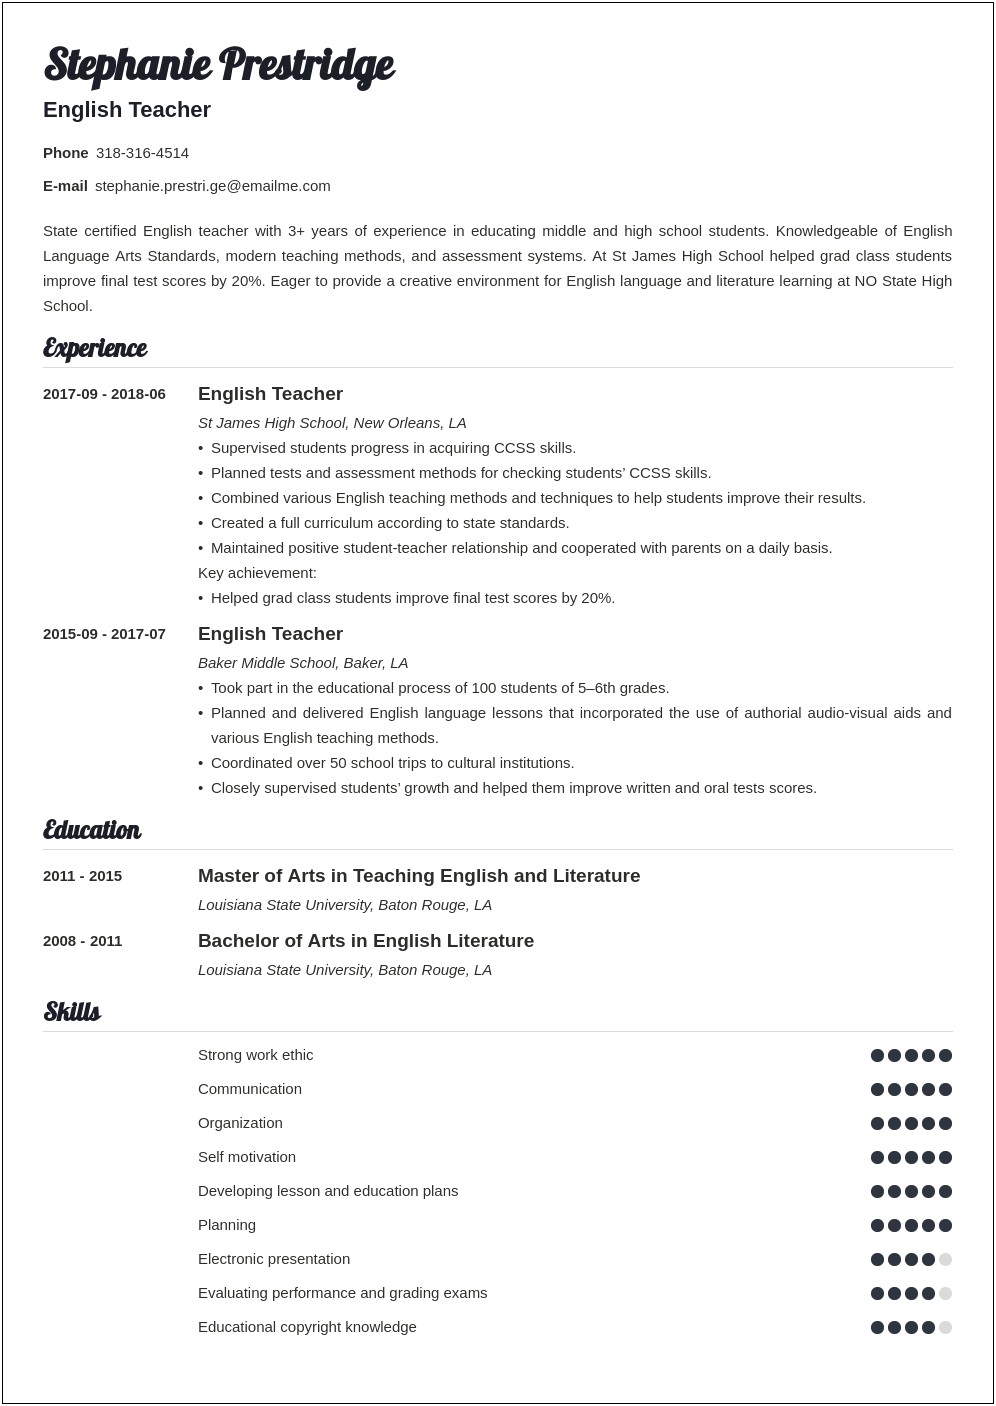 English Teacher Job Description Resume